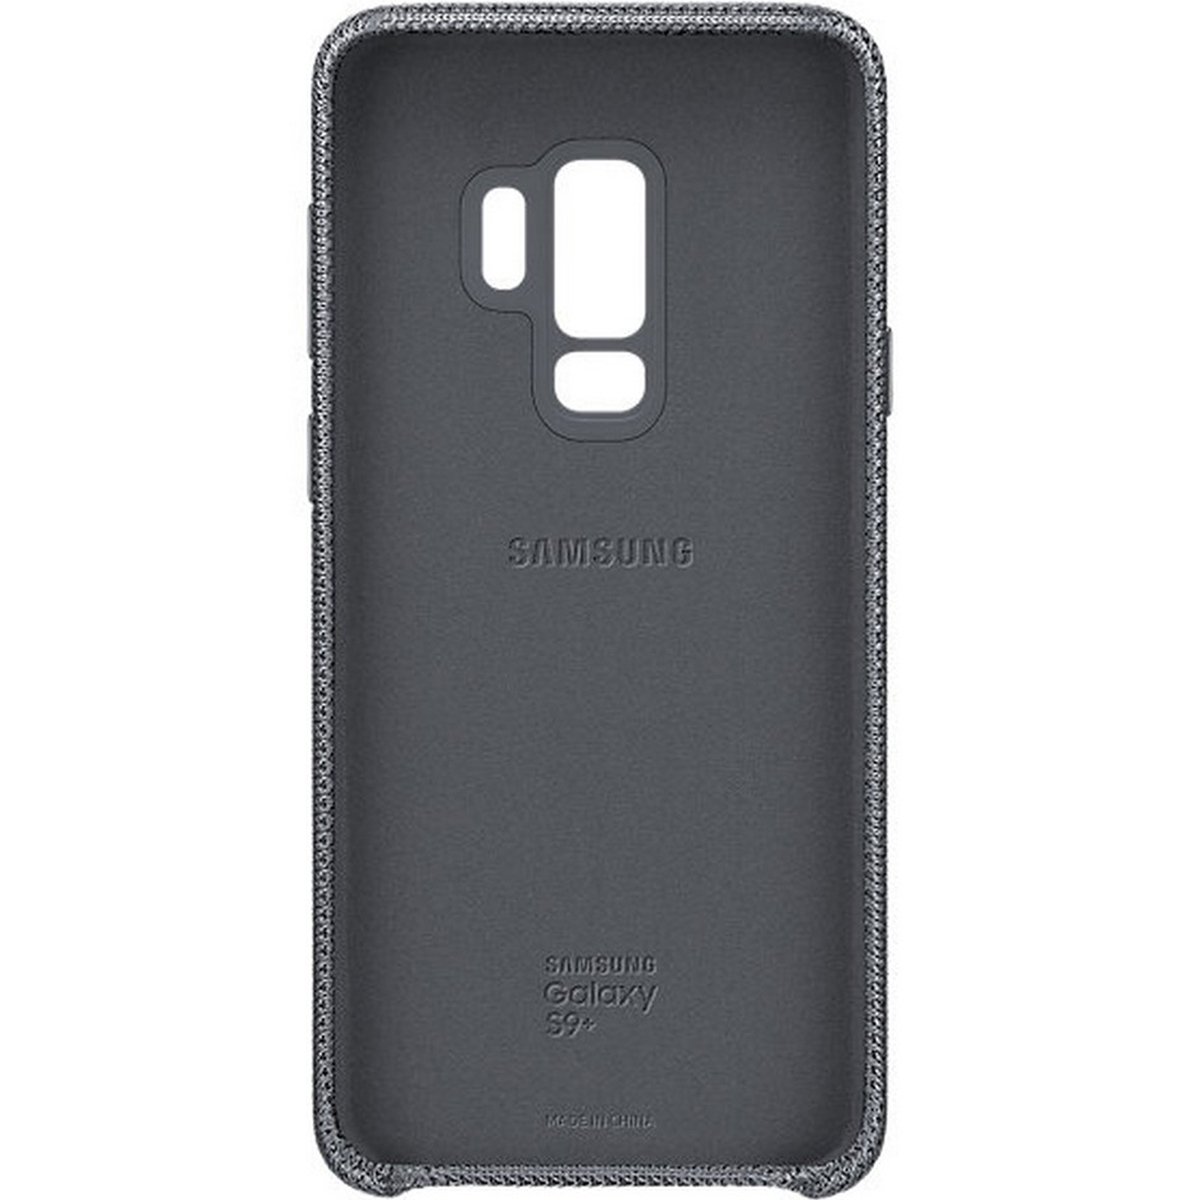 Samsung Galaxy S9+ Hyperknit Cover Gray EF-GG965FJEGWW